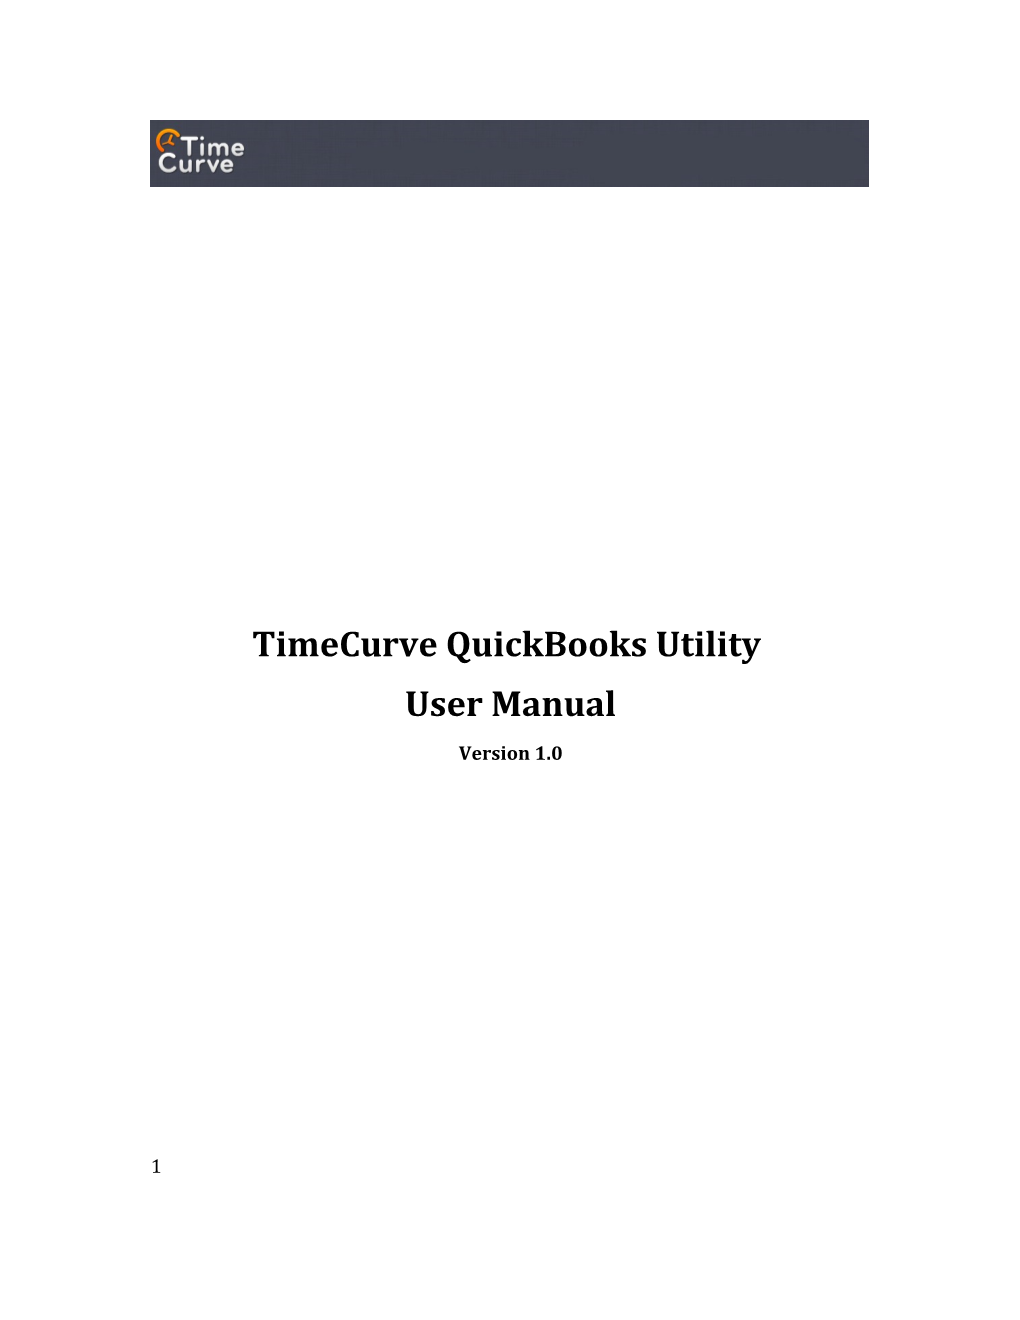 1.1 Purpose of Quickbooks Utility Application 3